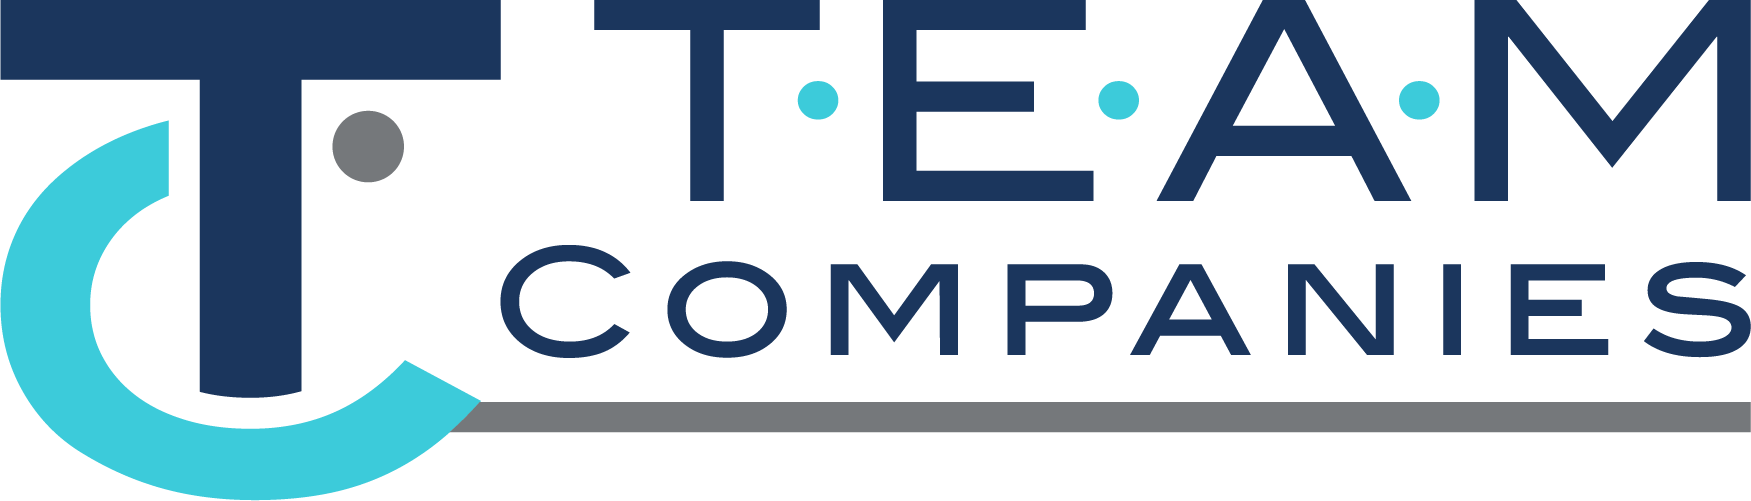 TEAM Professional Services Companies Company Logo